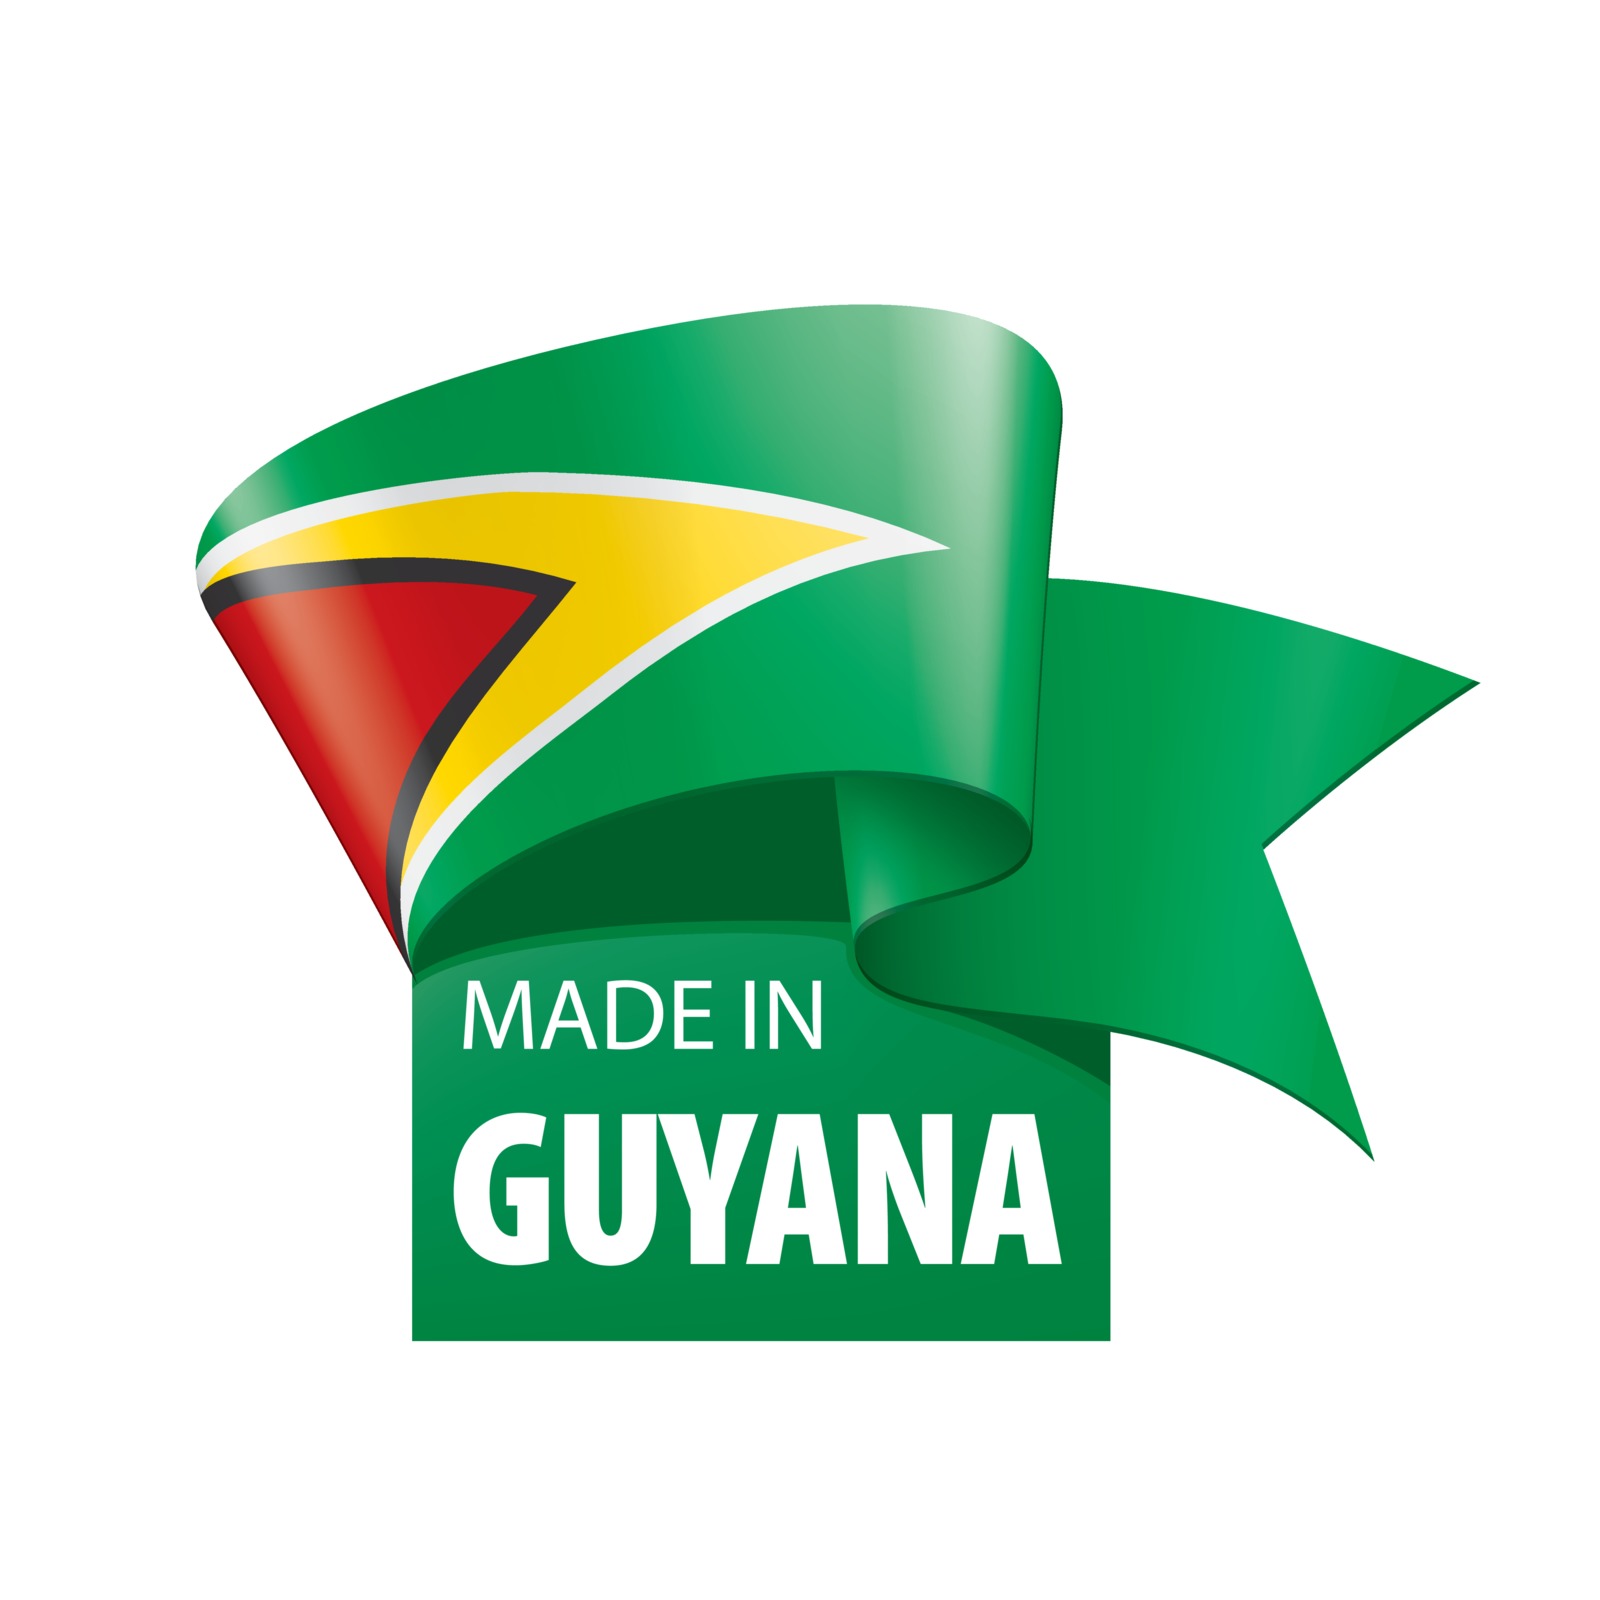 Guyana Flag Vector Illustration On A White Background Stock Image